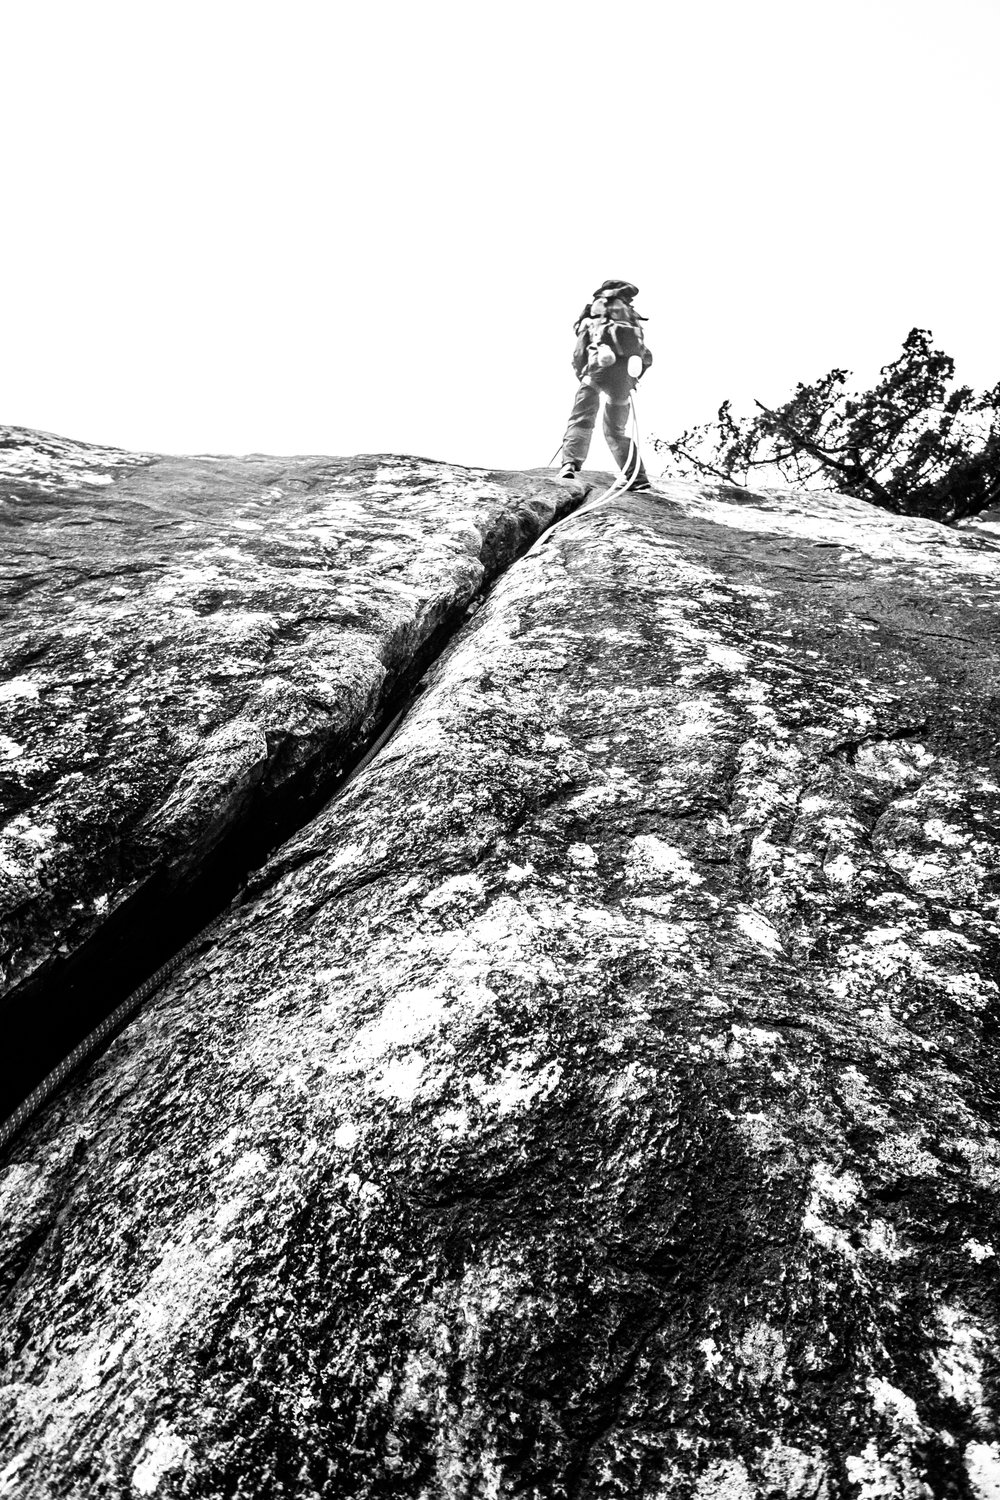 4-22-17 Rock Climbing black & white-6.jpg